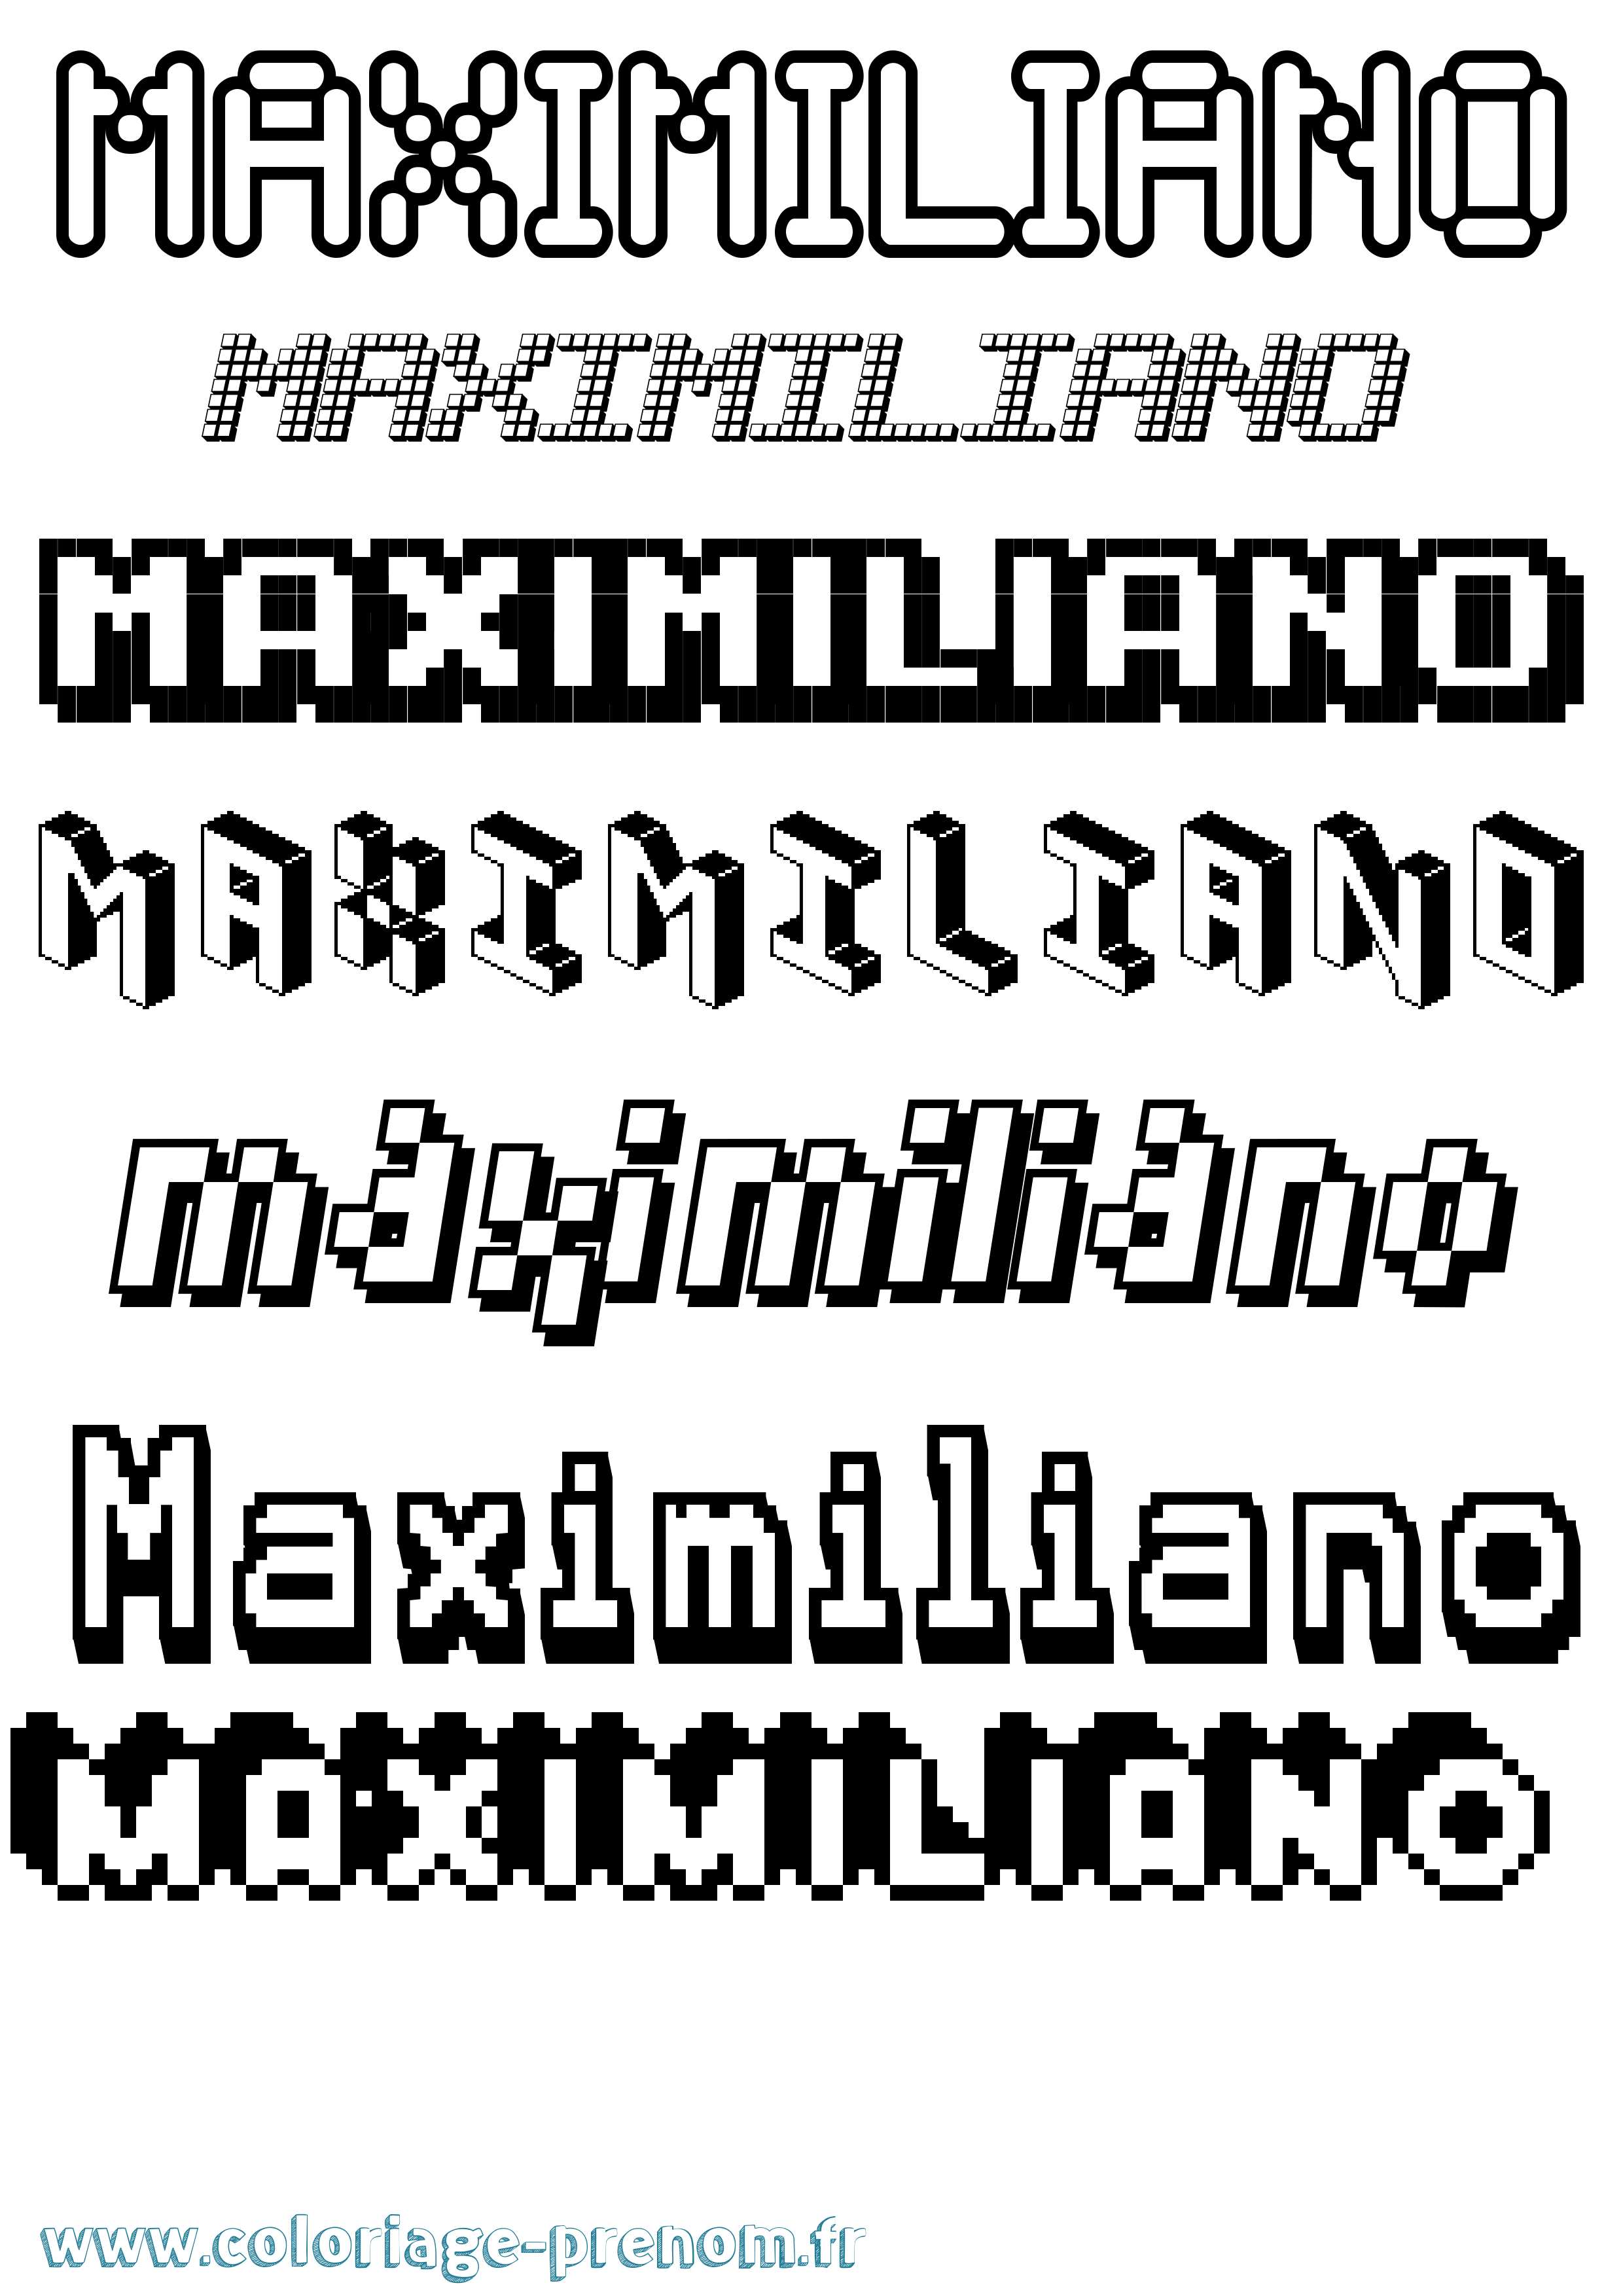 Coloriage prénom Maximiliano Pixel